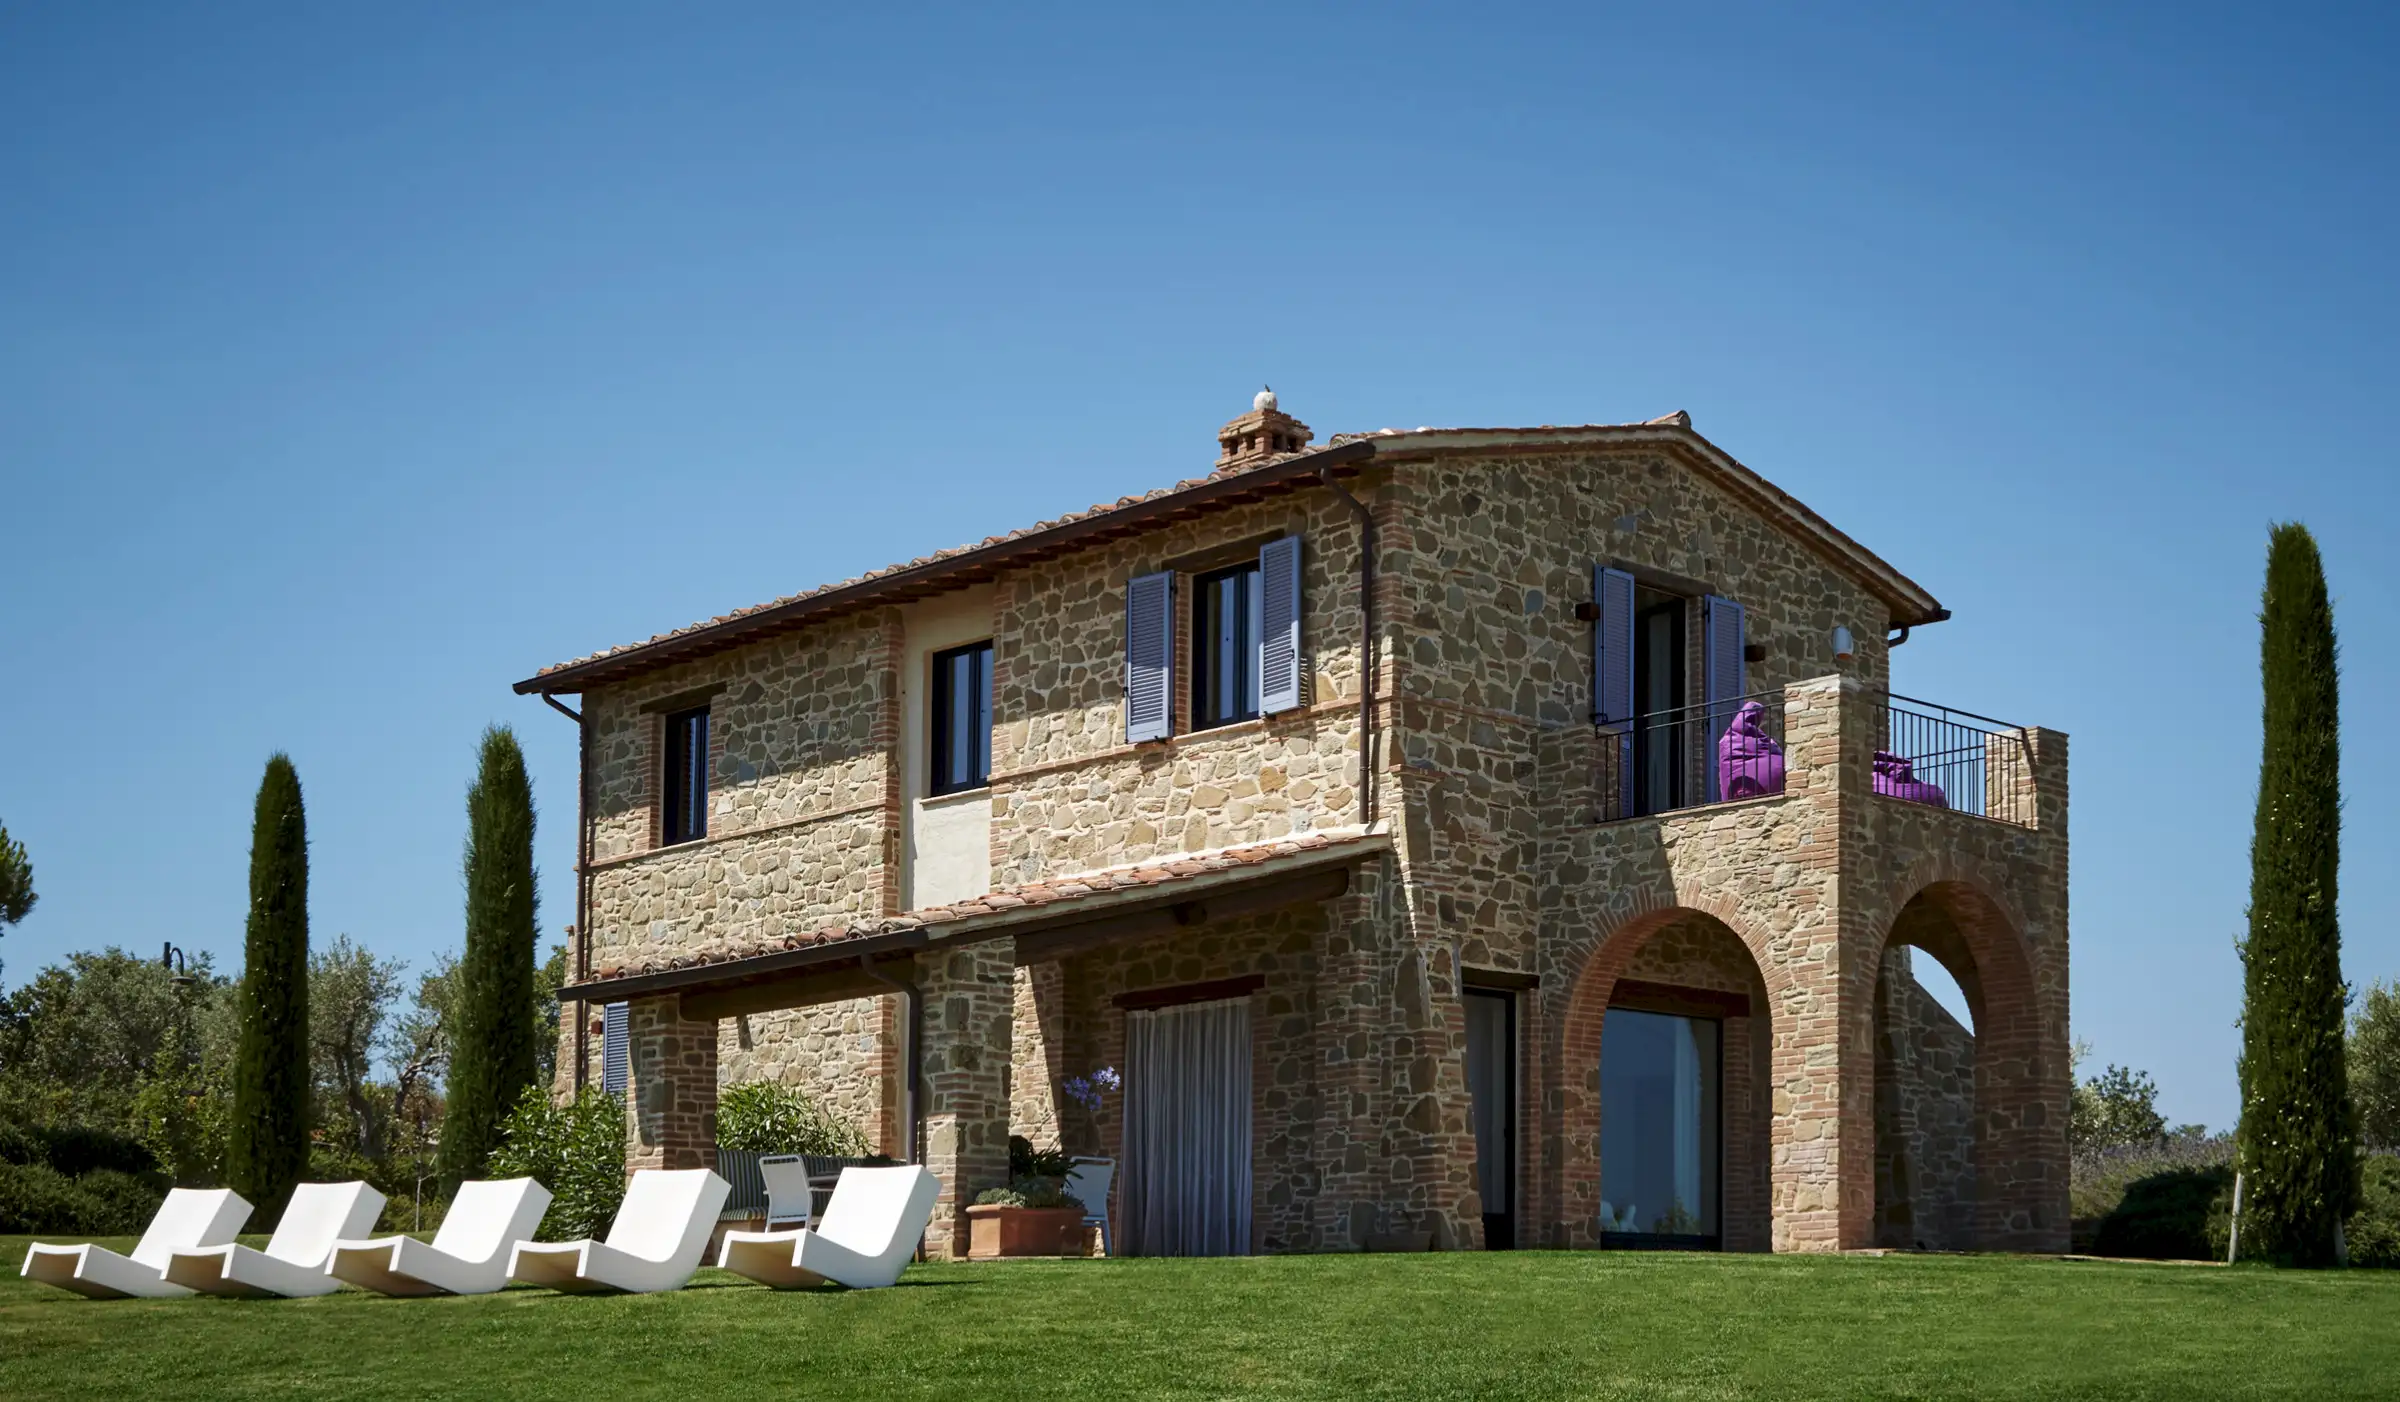 Casa Baroni Sud Vacation Rentals & Homes - Toscana, Italy